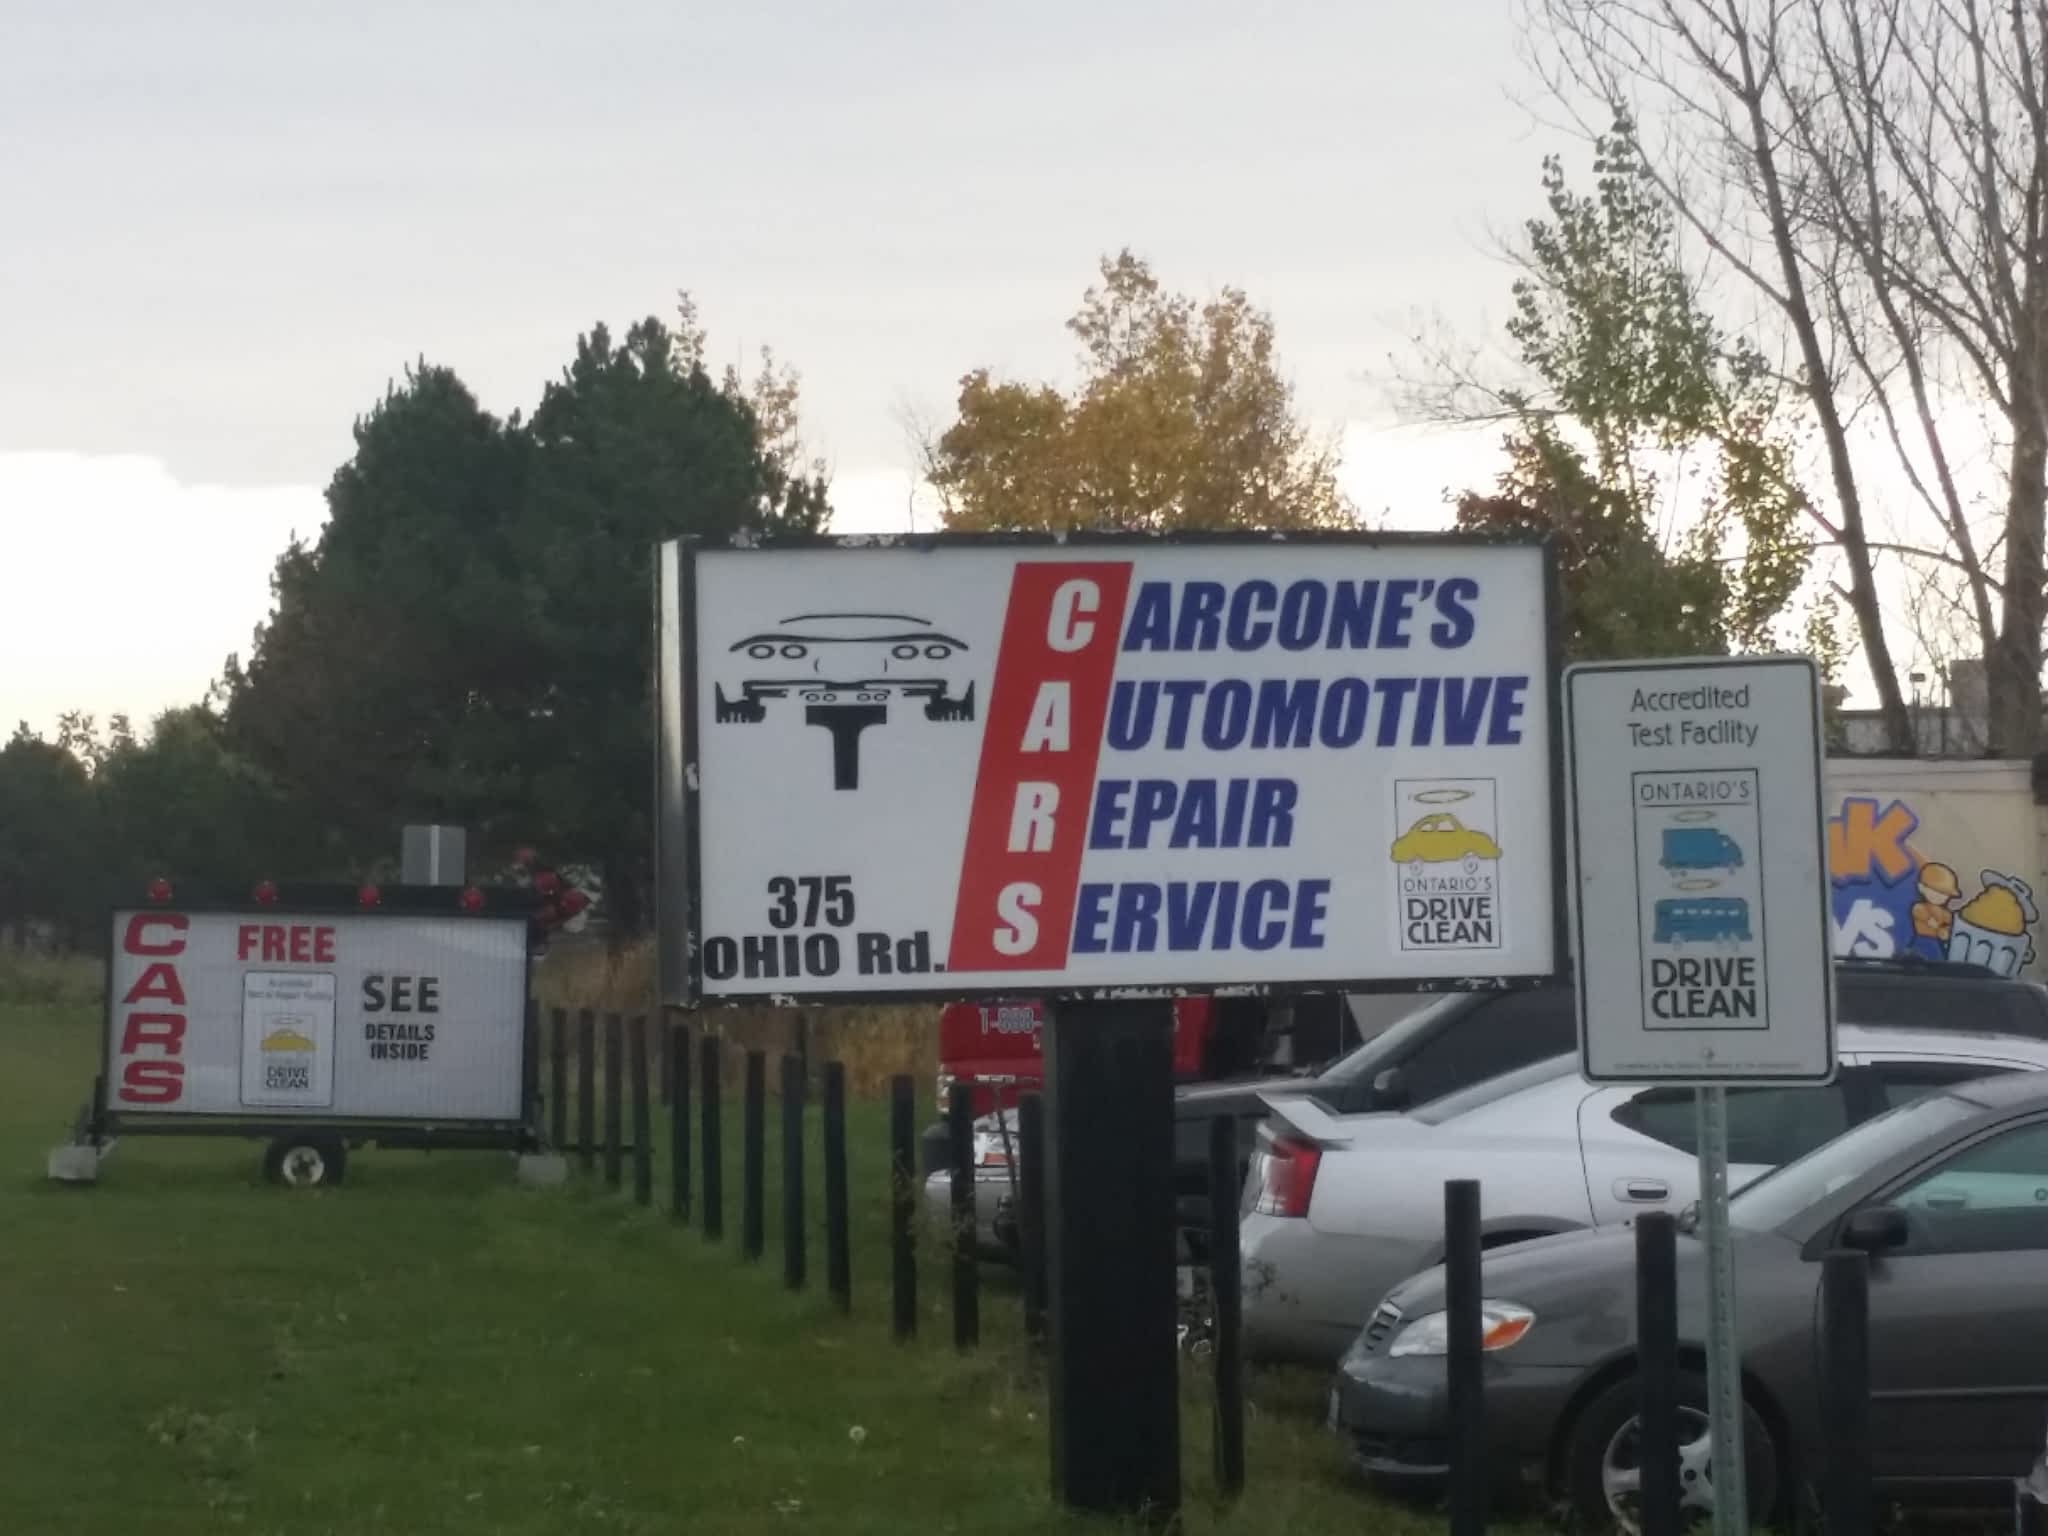 photo Carcone's Automotive Repair Service